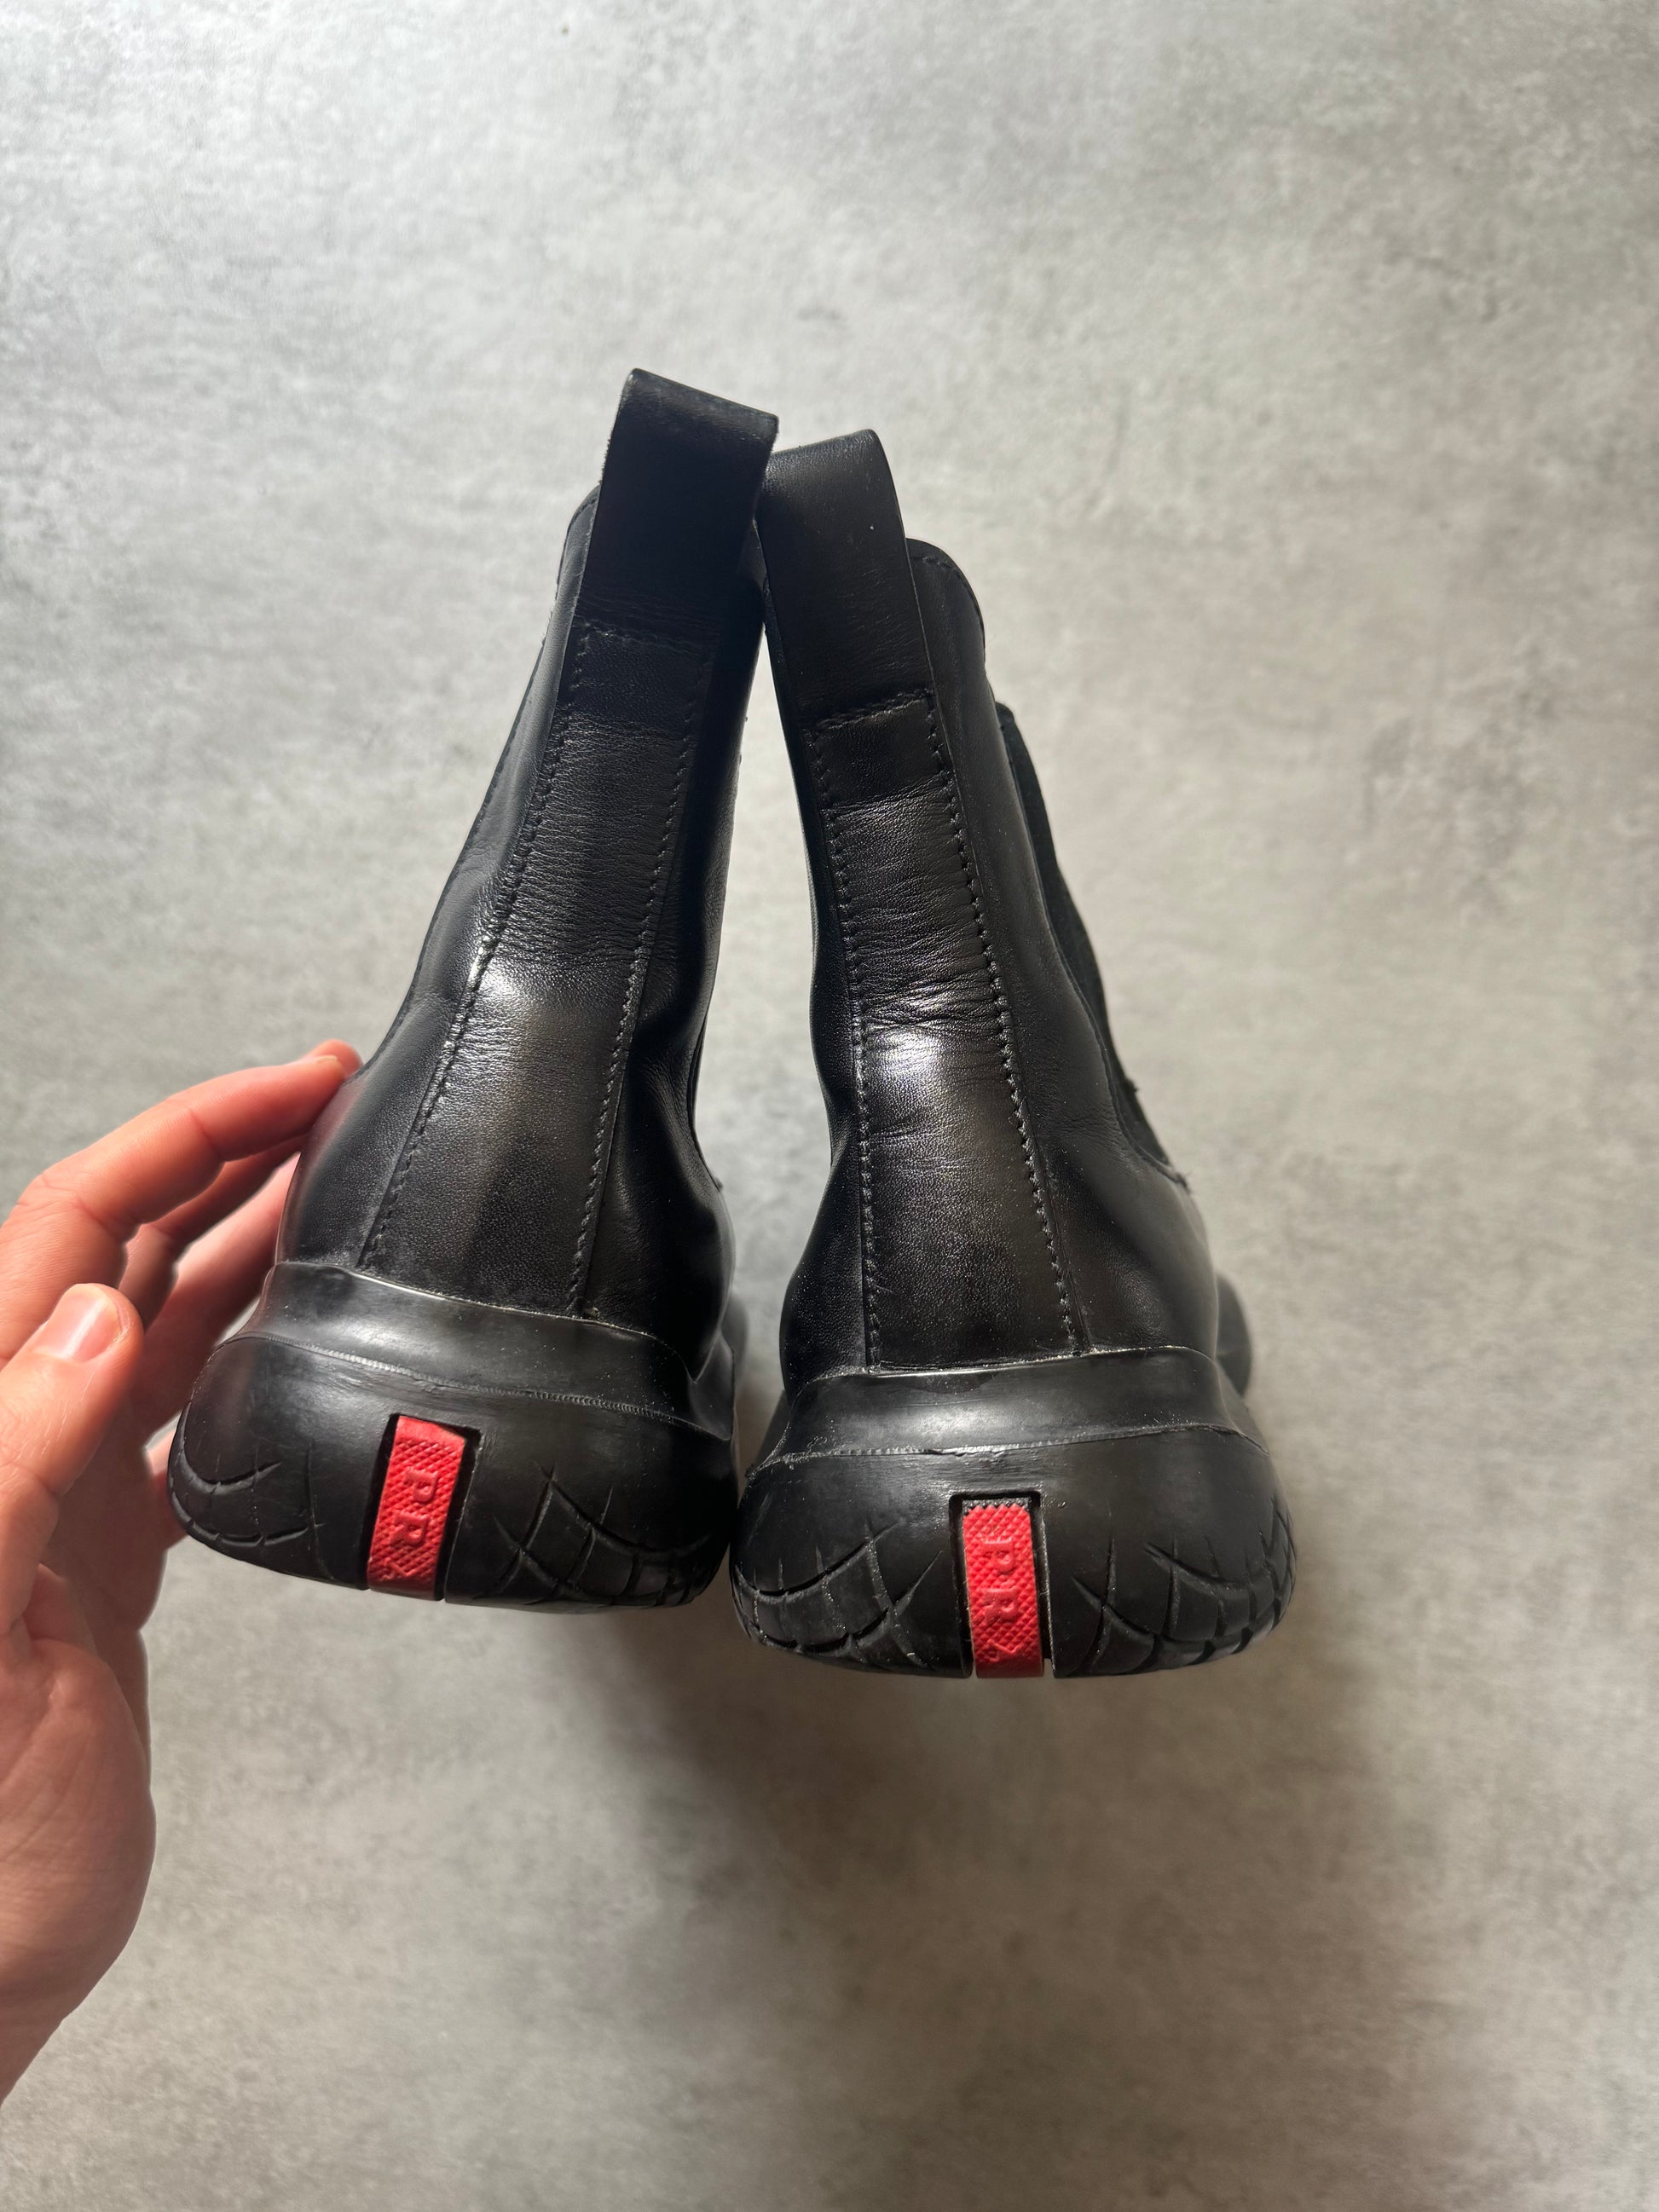 FW1999 Prada Ankle Black Leather Boots  (42,5) - 8